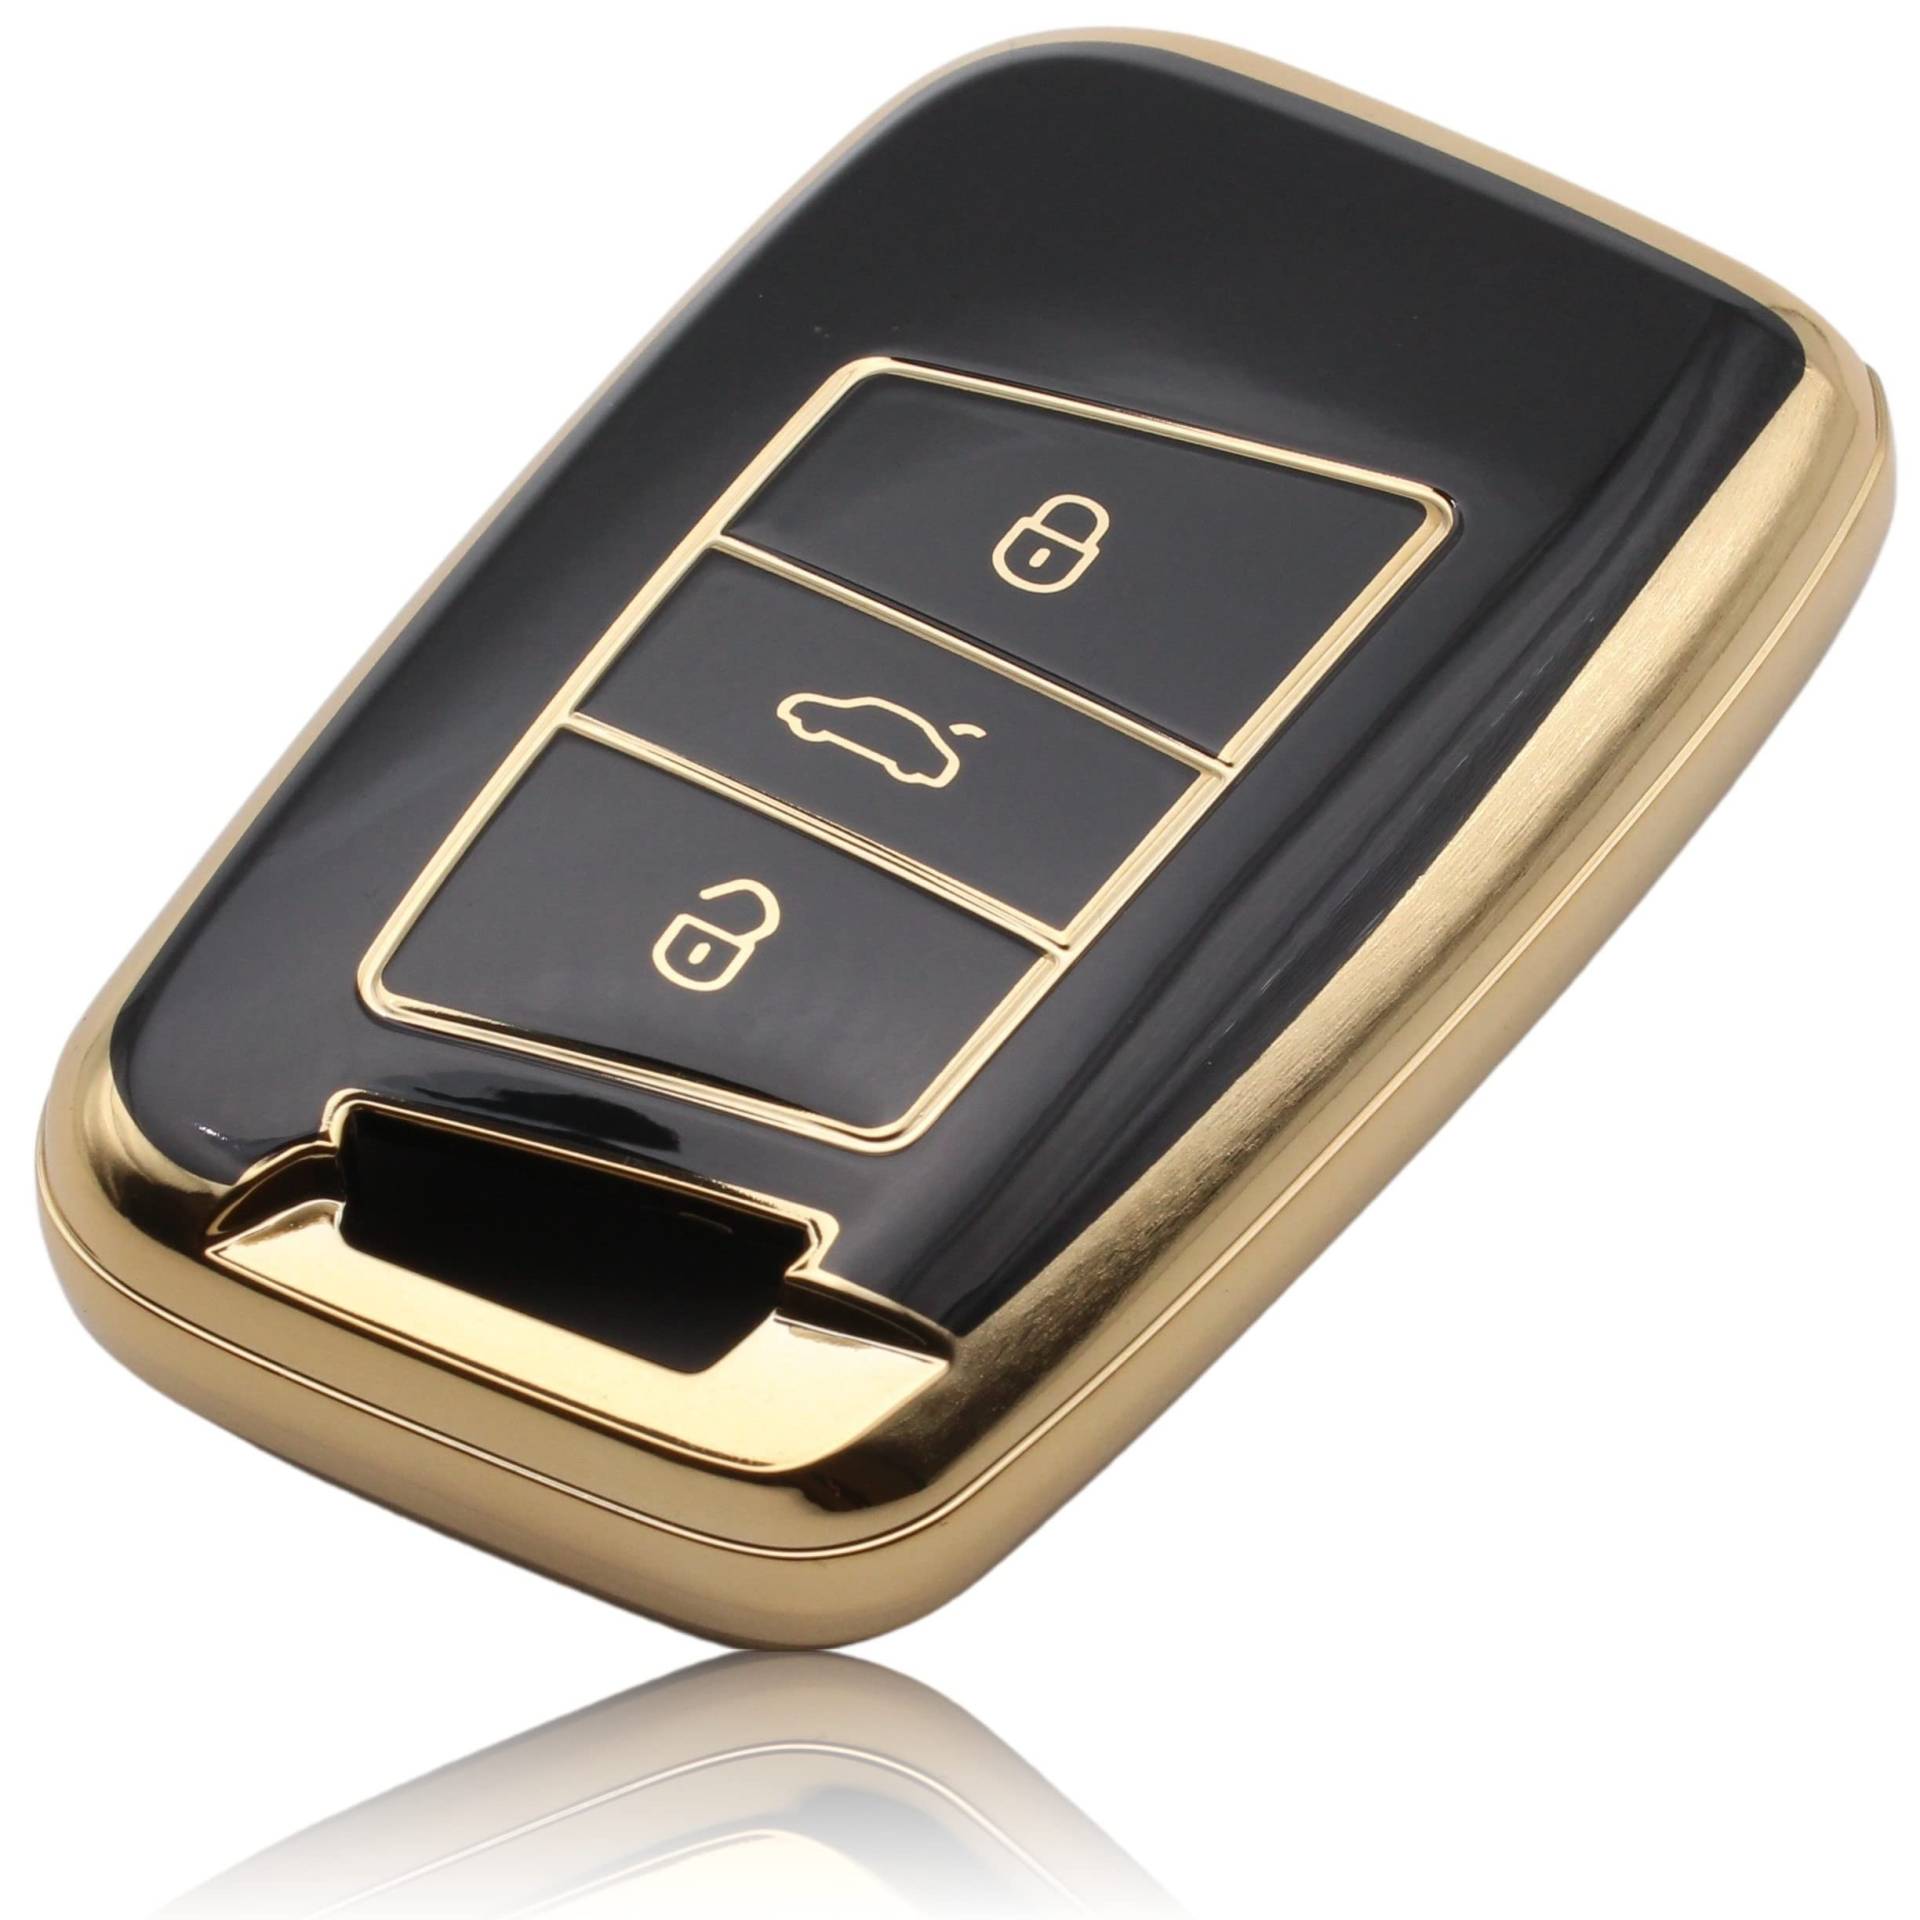 FOAMO Autoschlüssel Hülle Kompatibel mit VW Passat B8, SEAT, Skoda Keyless Autoschlüssel - TPU Schlüsselhülle - Schutz-Hülle für Autoschlüssel Schwarz-Gold von FOAMO